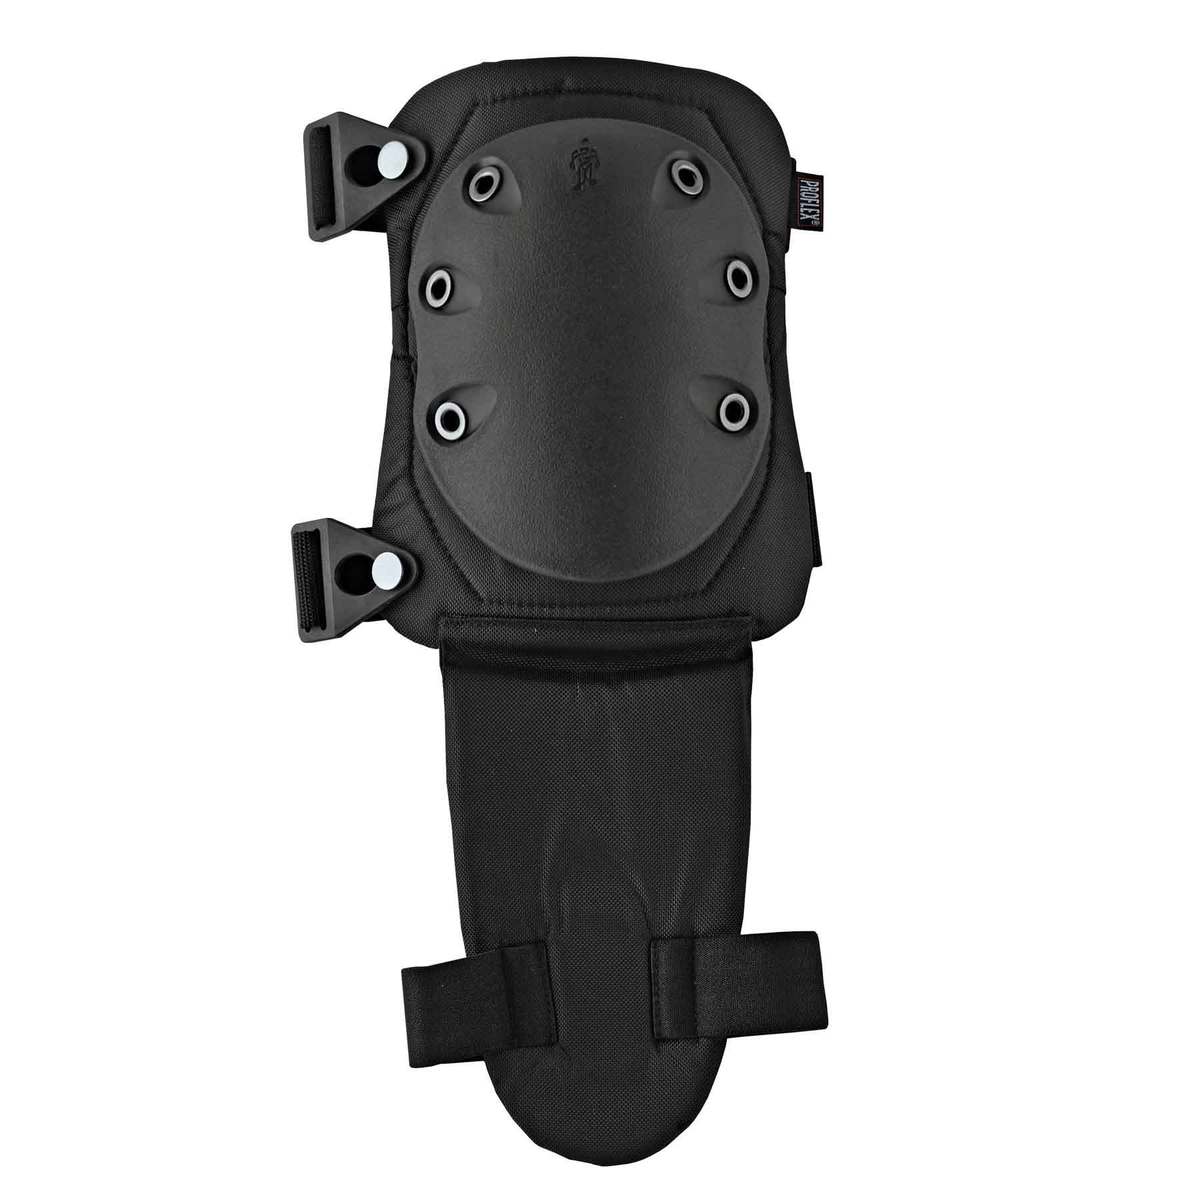 Ergodyne One Size Fits Most Black ProFlex® 340 NBR Foam Slip-Resistant Knee Pad With Shin Guard